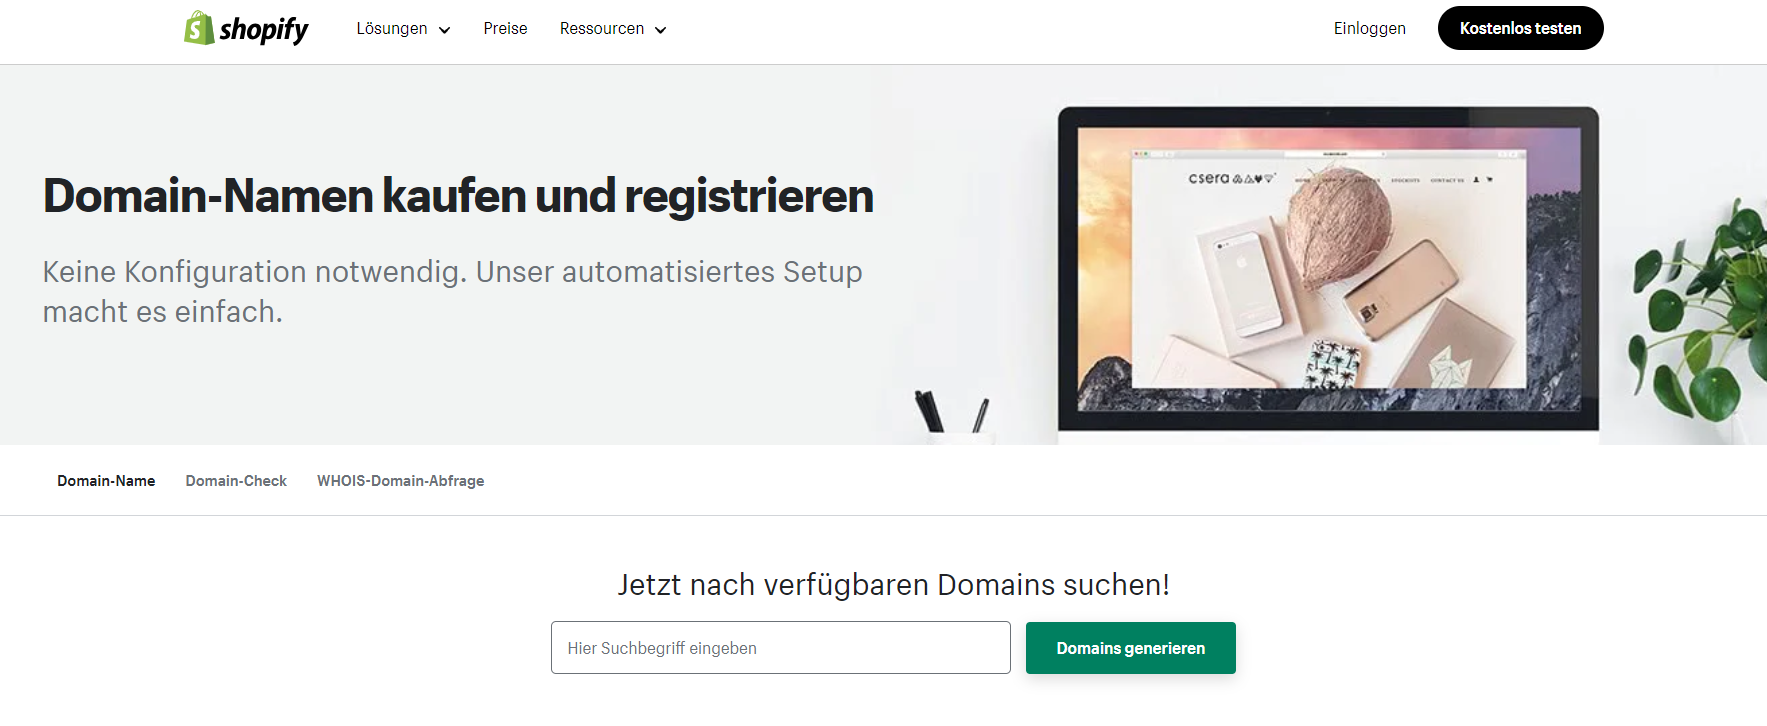 Shopify als Domainregistrar.